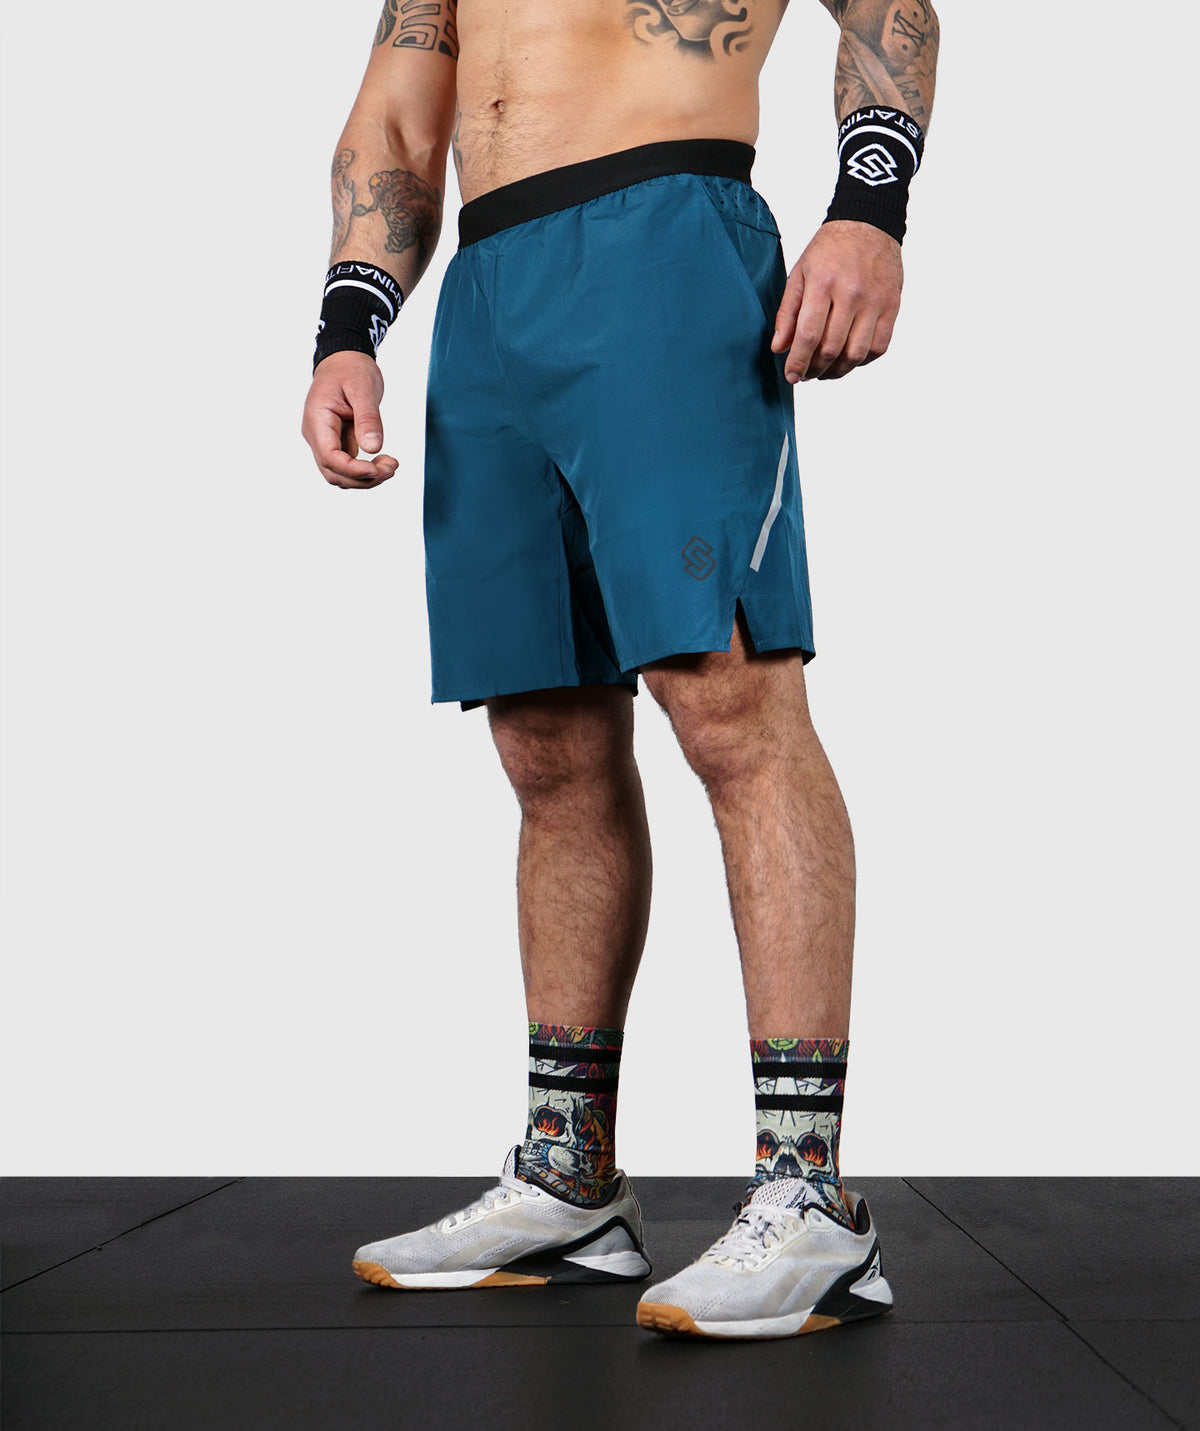 WorkOut Shorts Uomo Blu - STMN Fitness